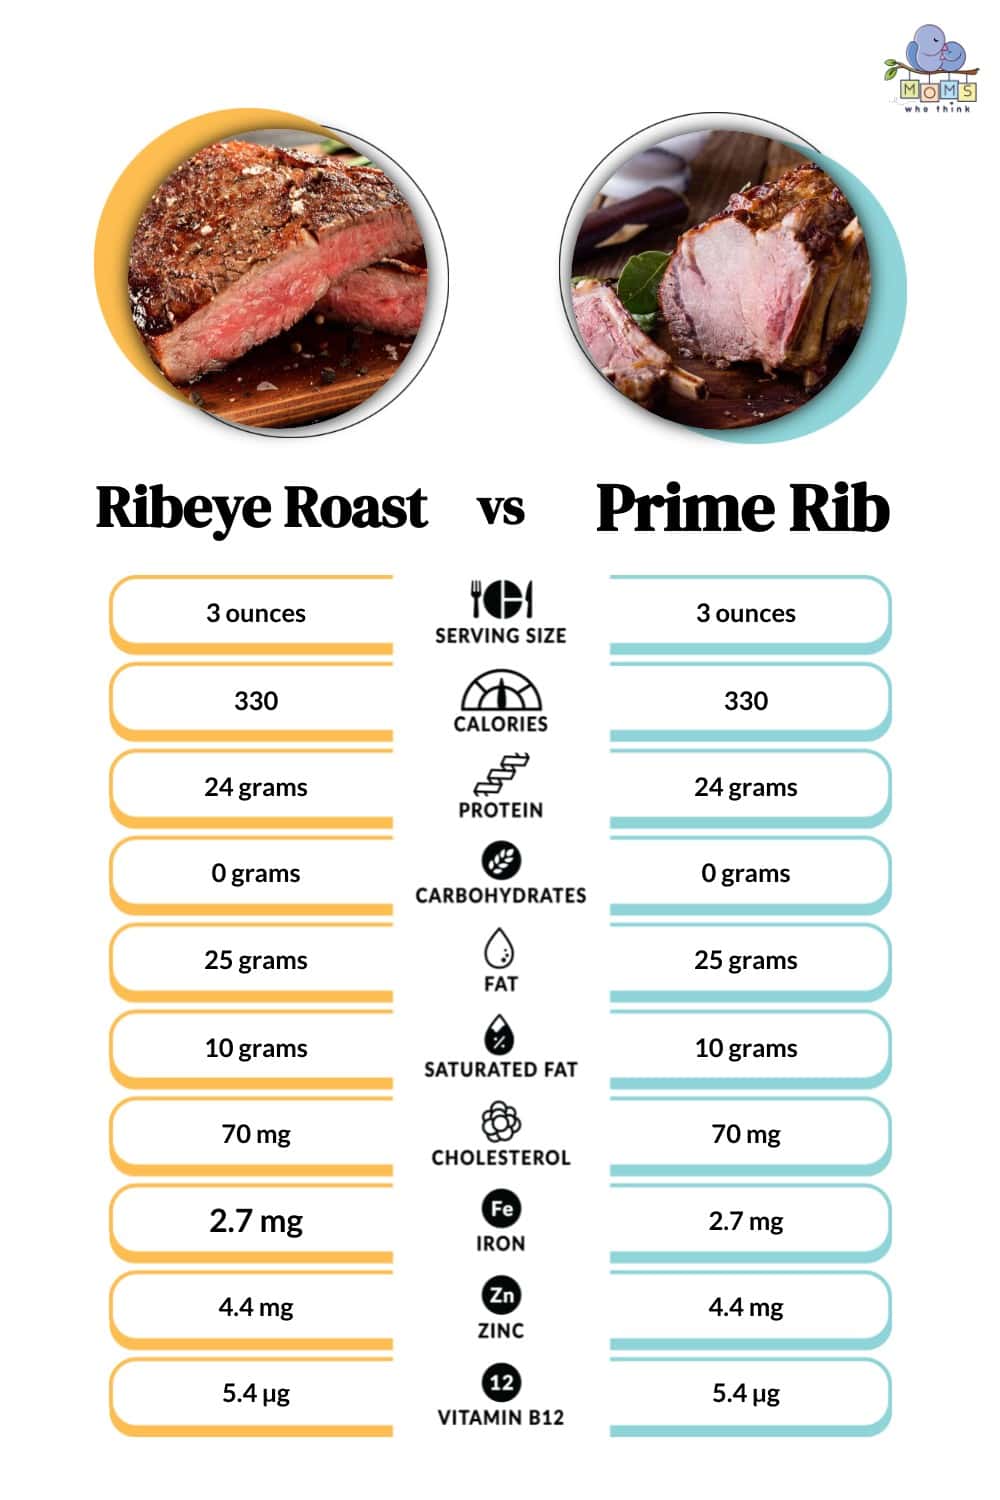 Ribeye Roast vs Prime Rib